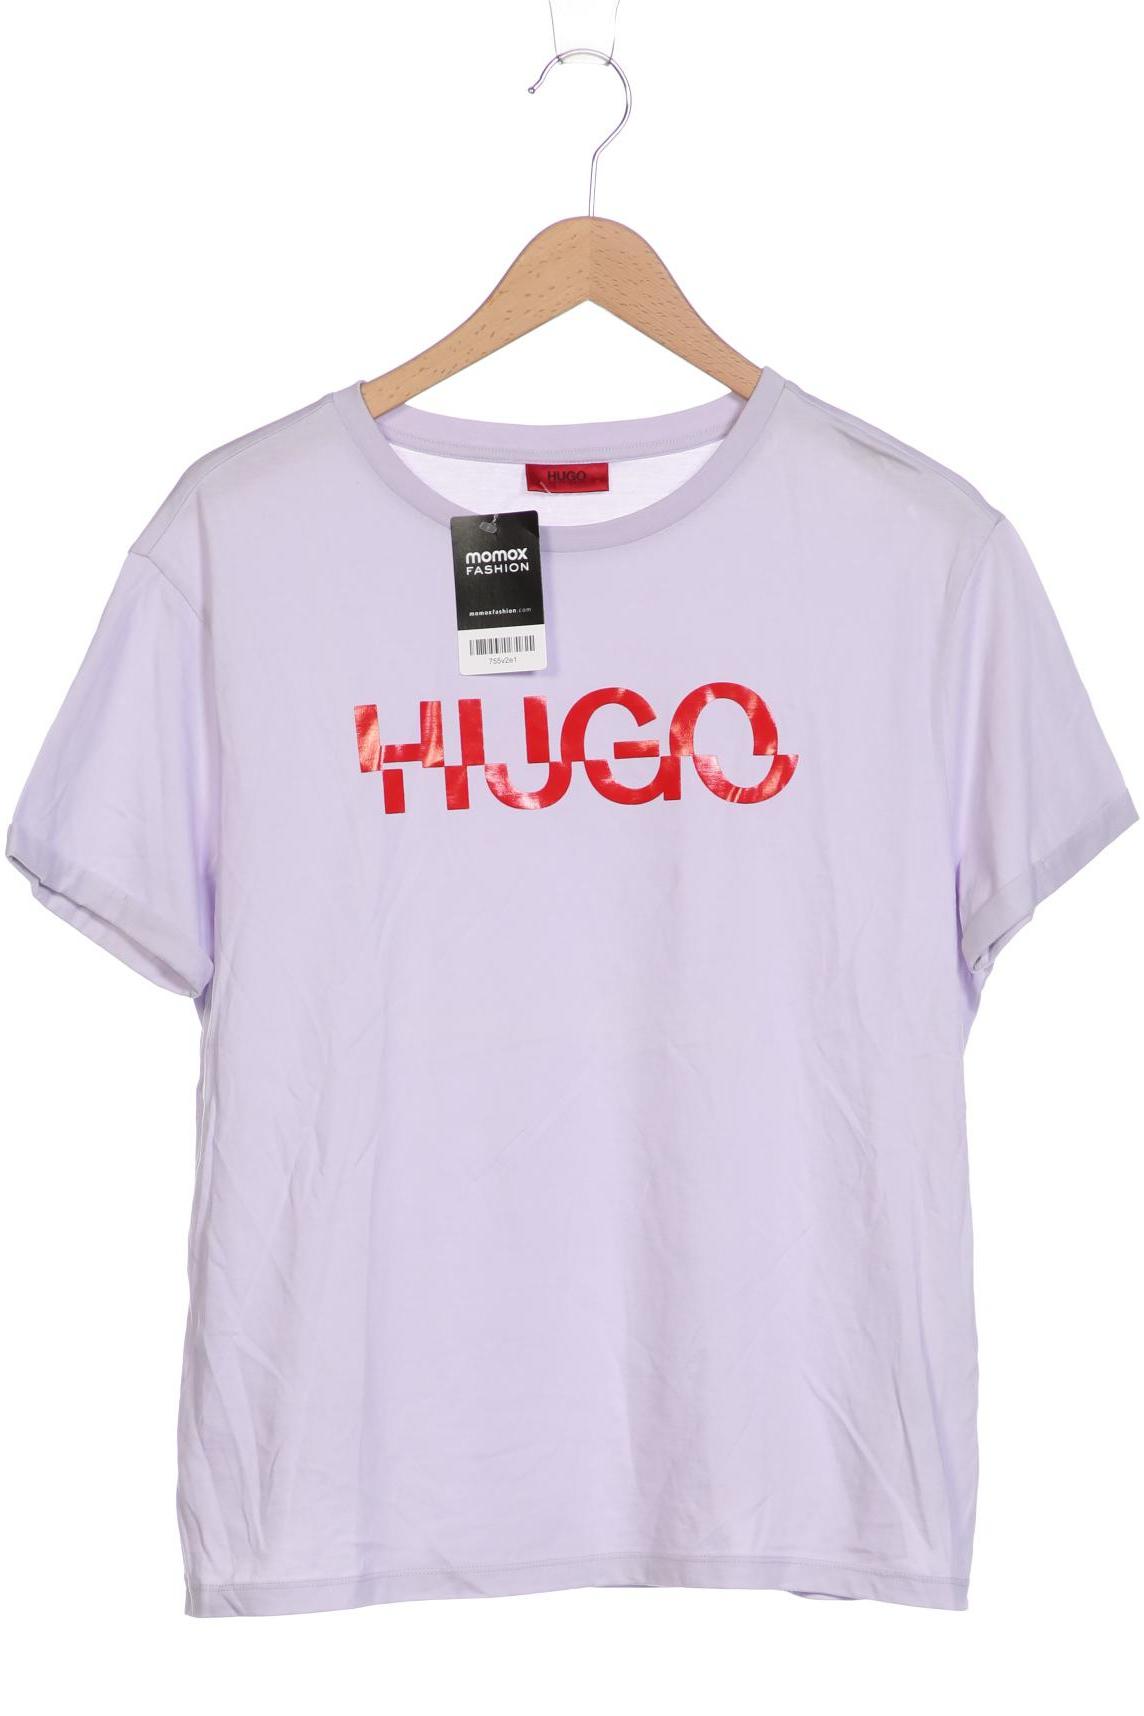 HUGO by Hugo Boss Herren T-Shirt, flieder von HUGO by Hugo Boss